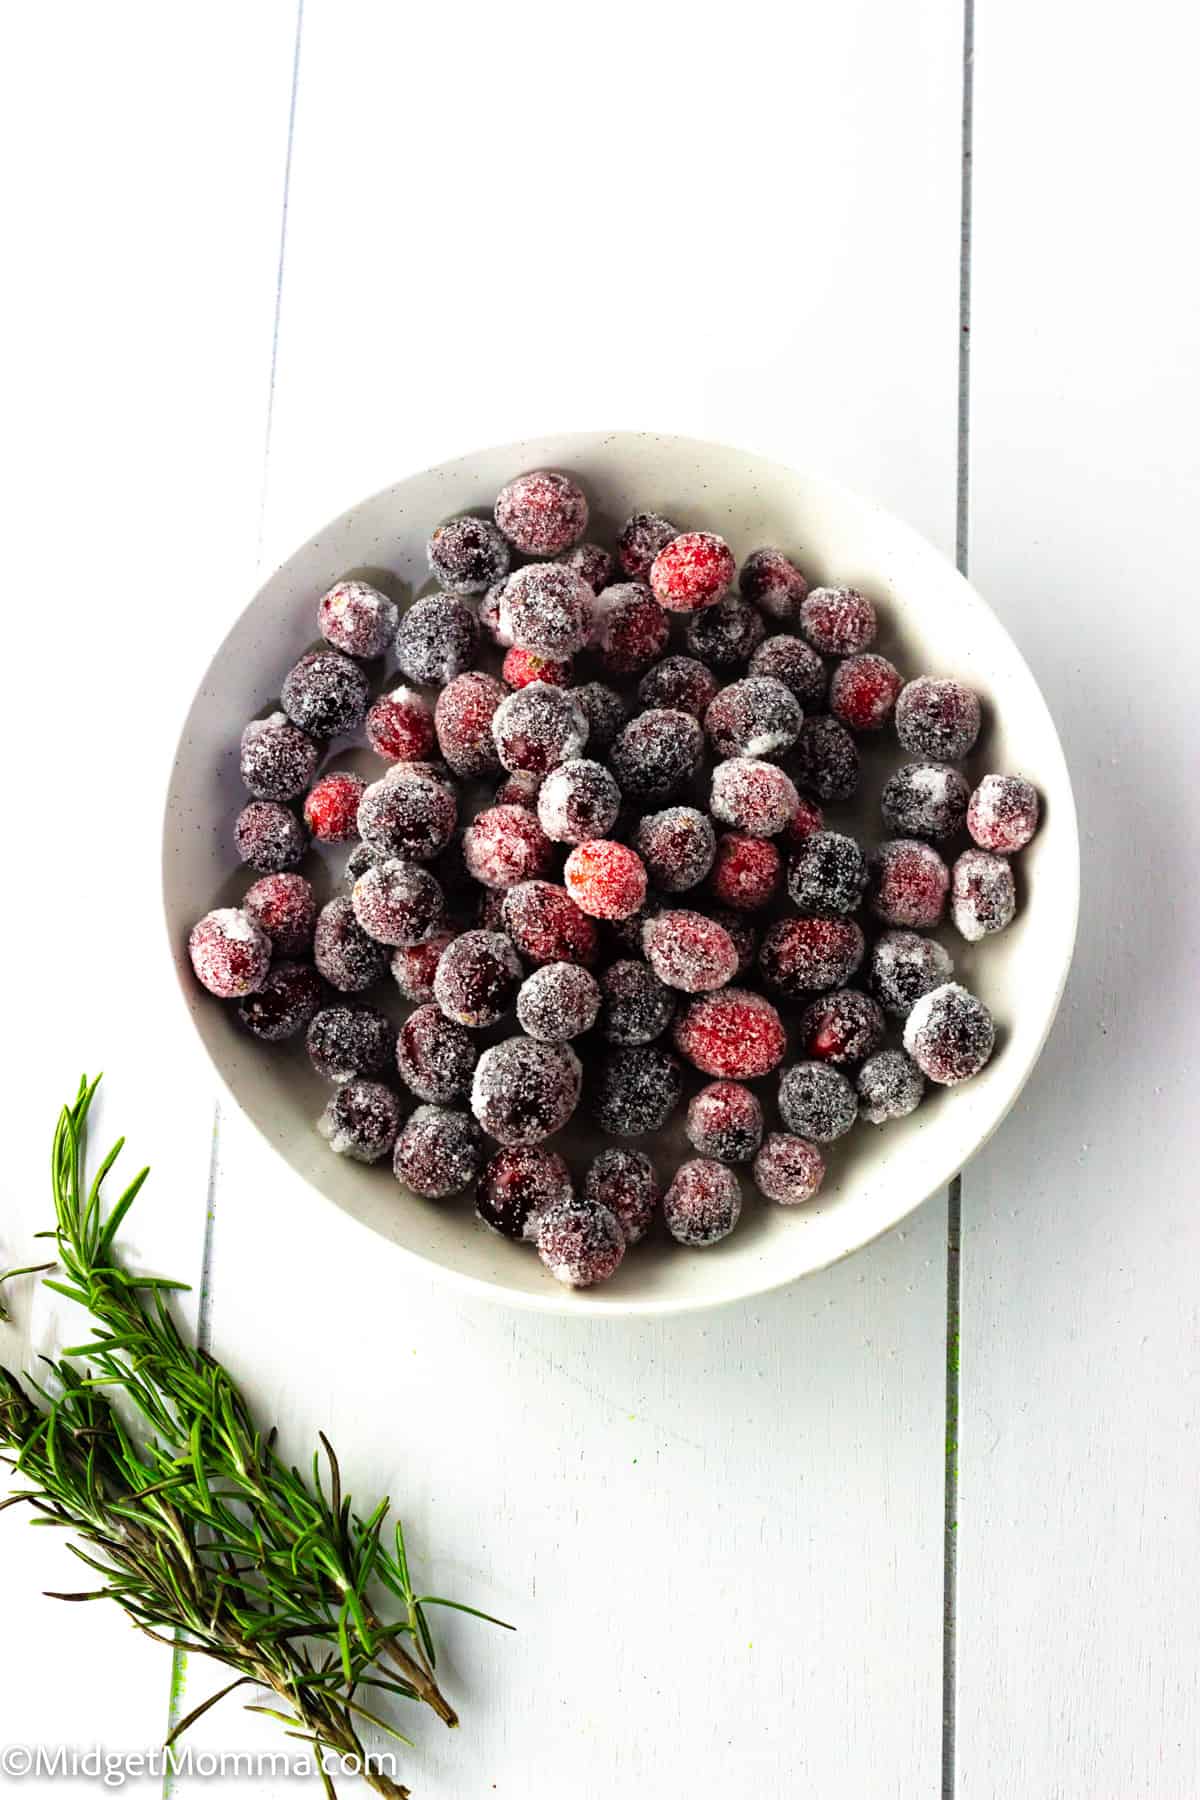 Sugared Cranberries Recipe